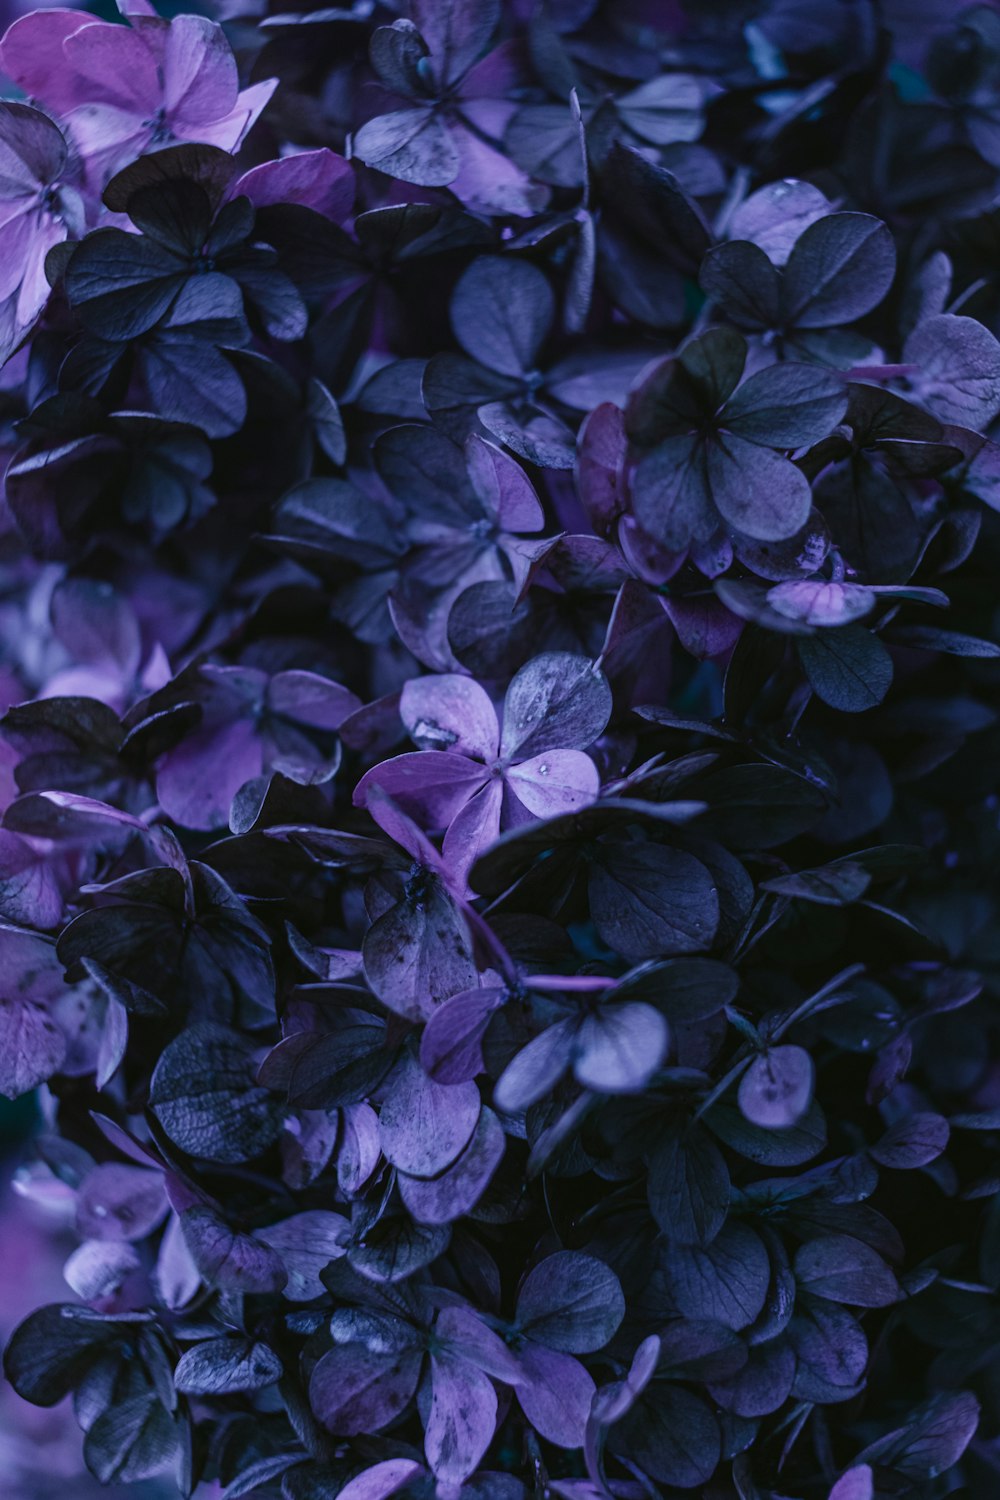 a close up of a bush of purple flowers